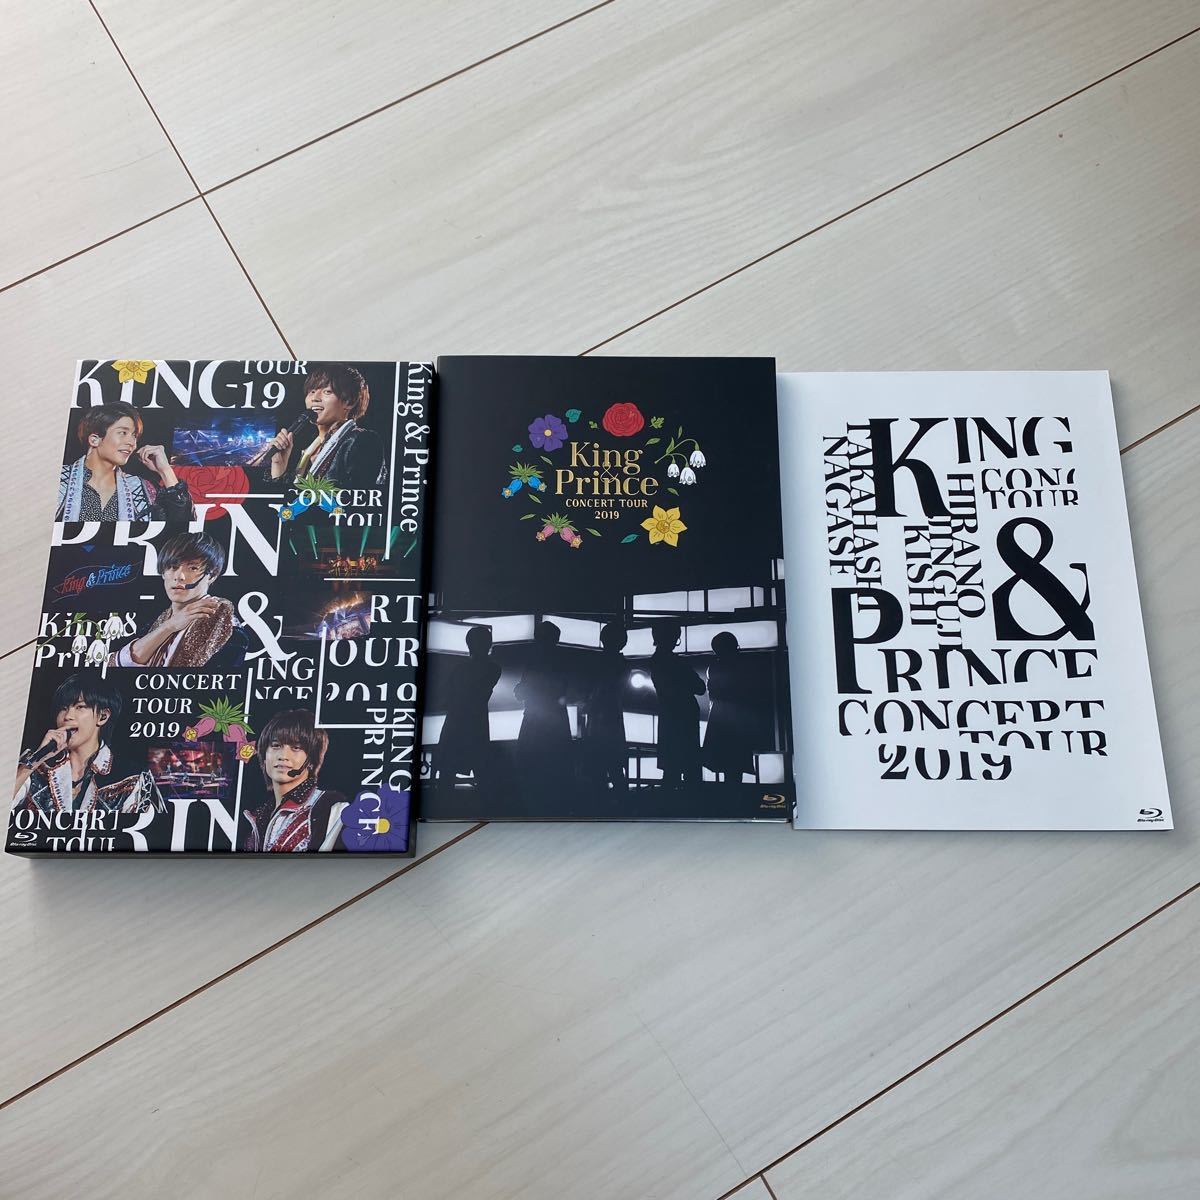 King & Prince/CONCERT TOUR 2019 ブルーレイ - bookteen.net